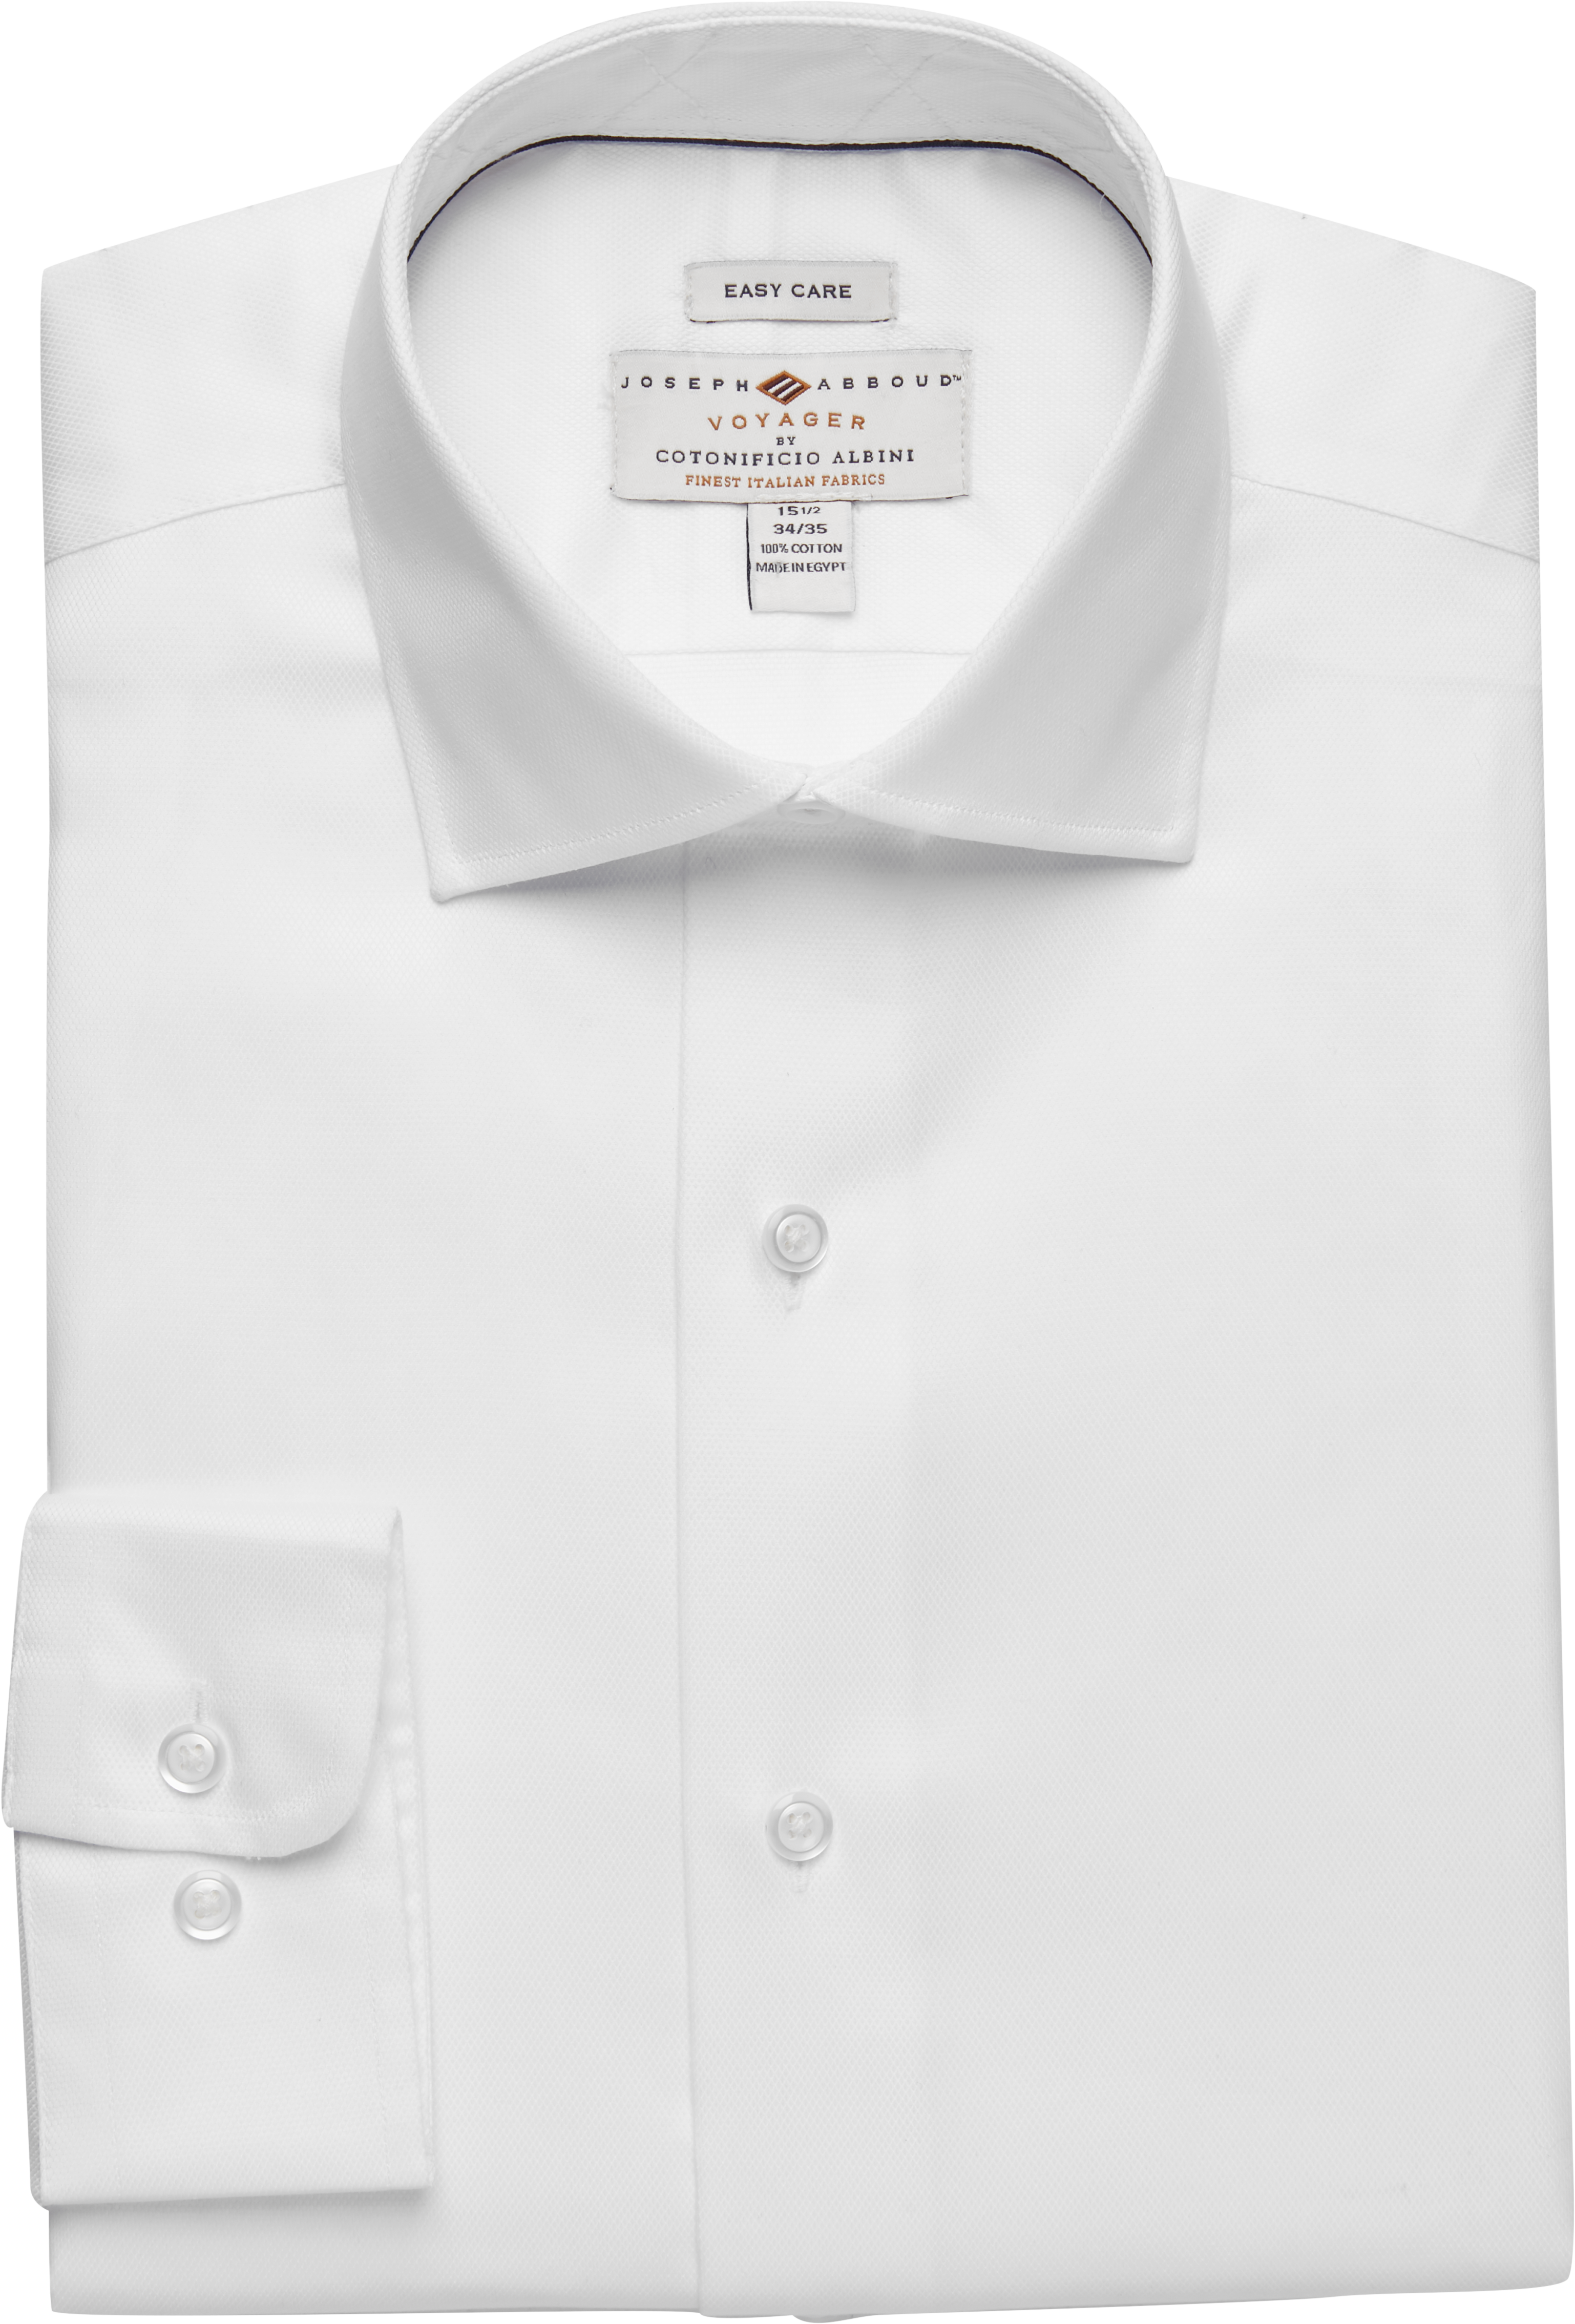 men's wearhouse white dress shirt